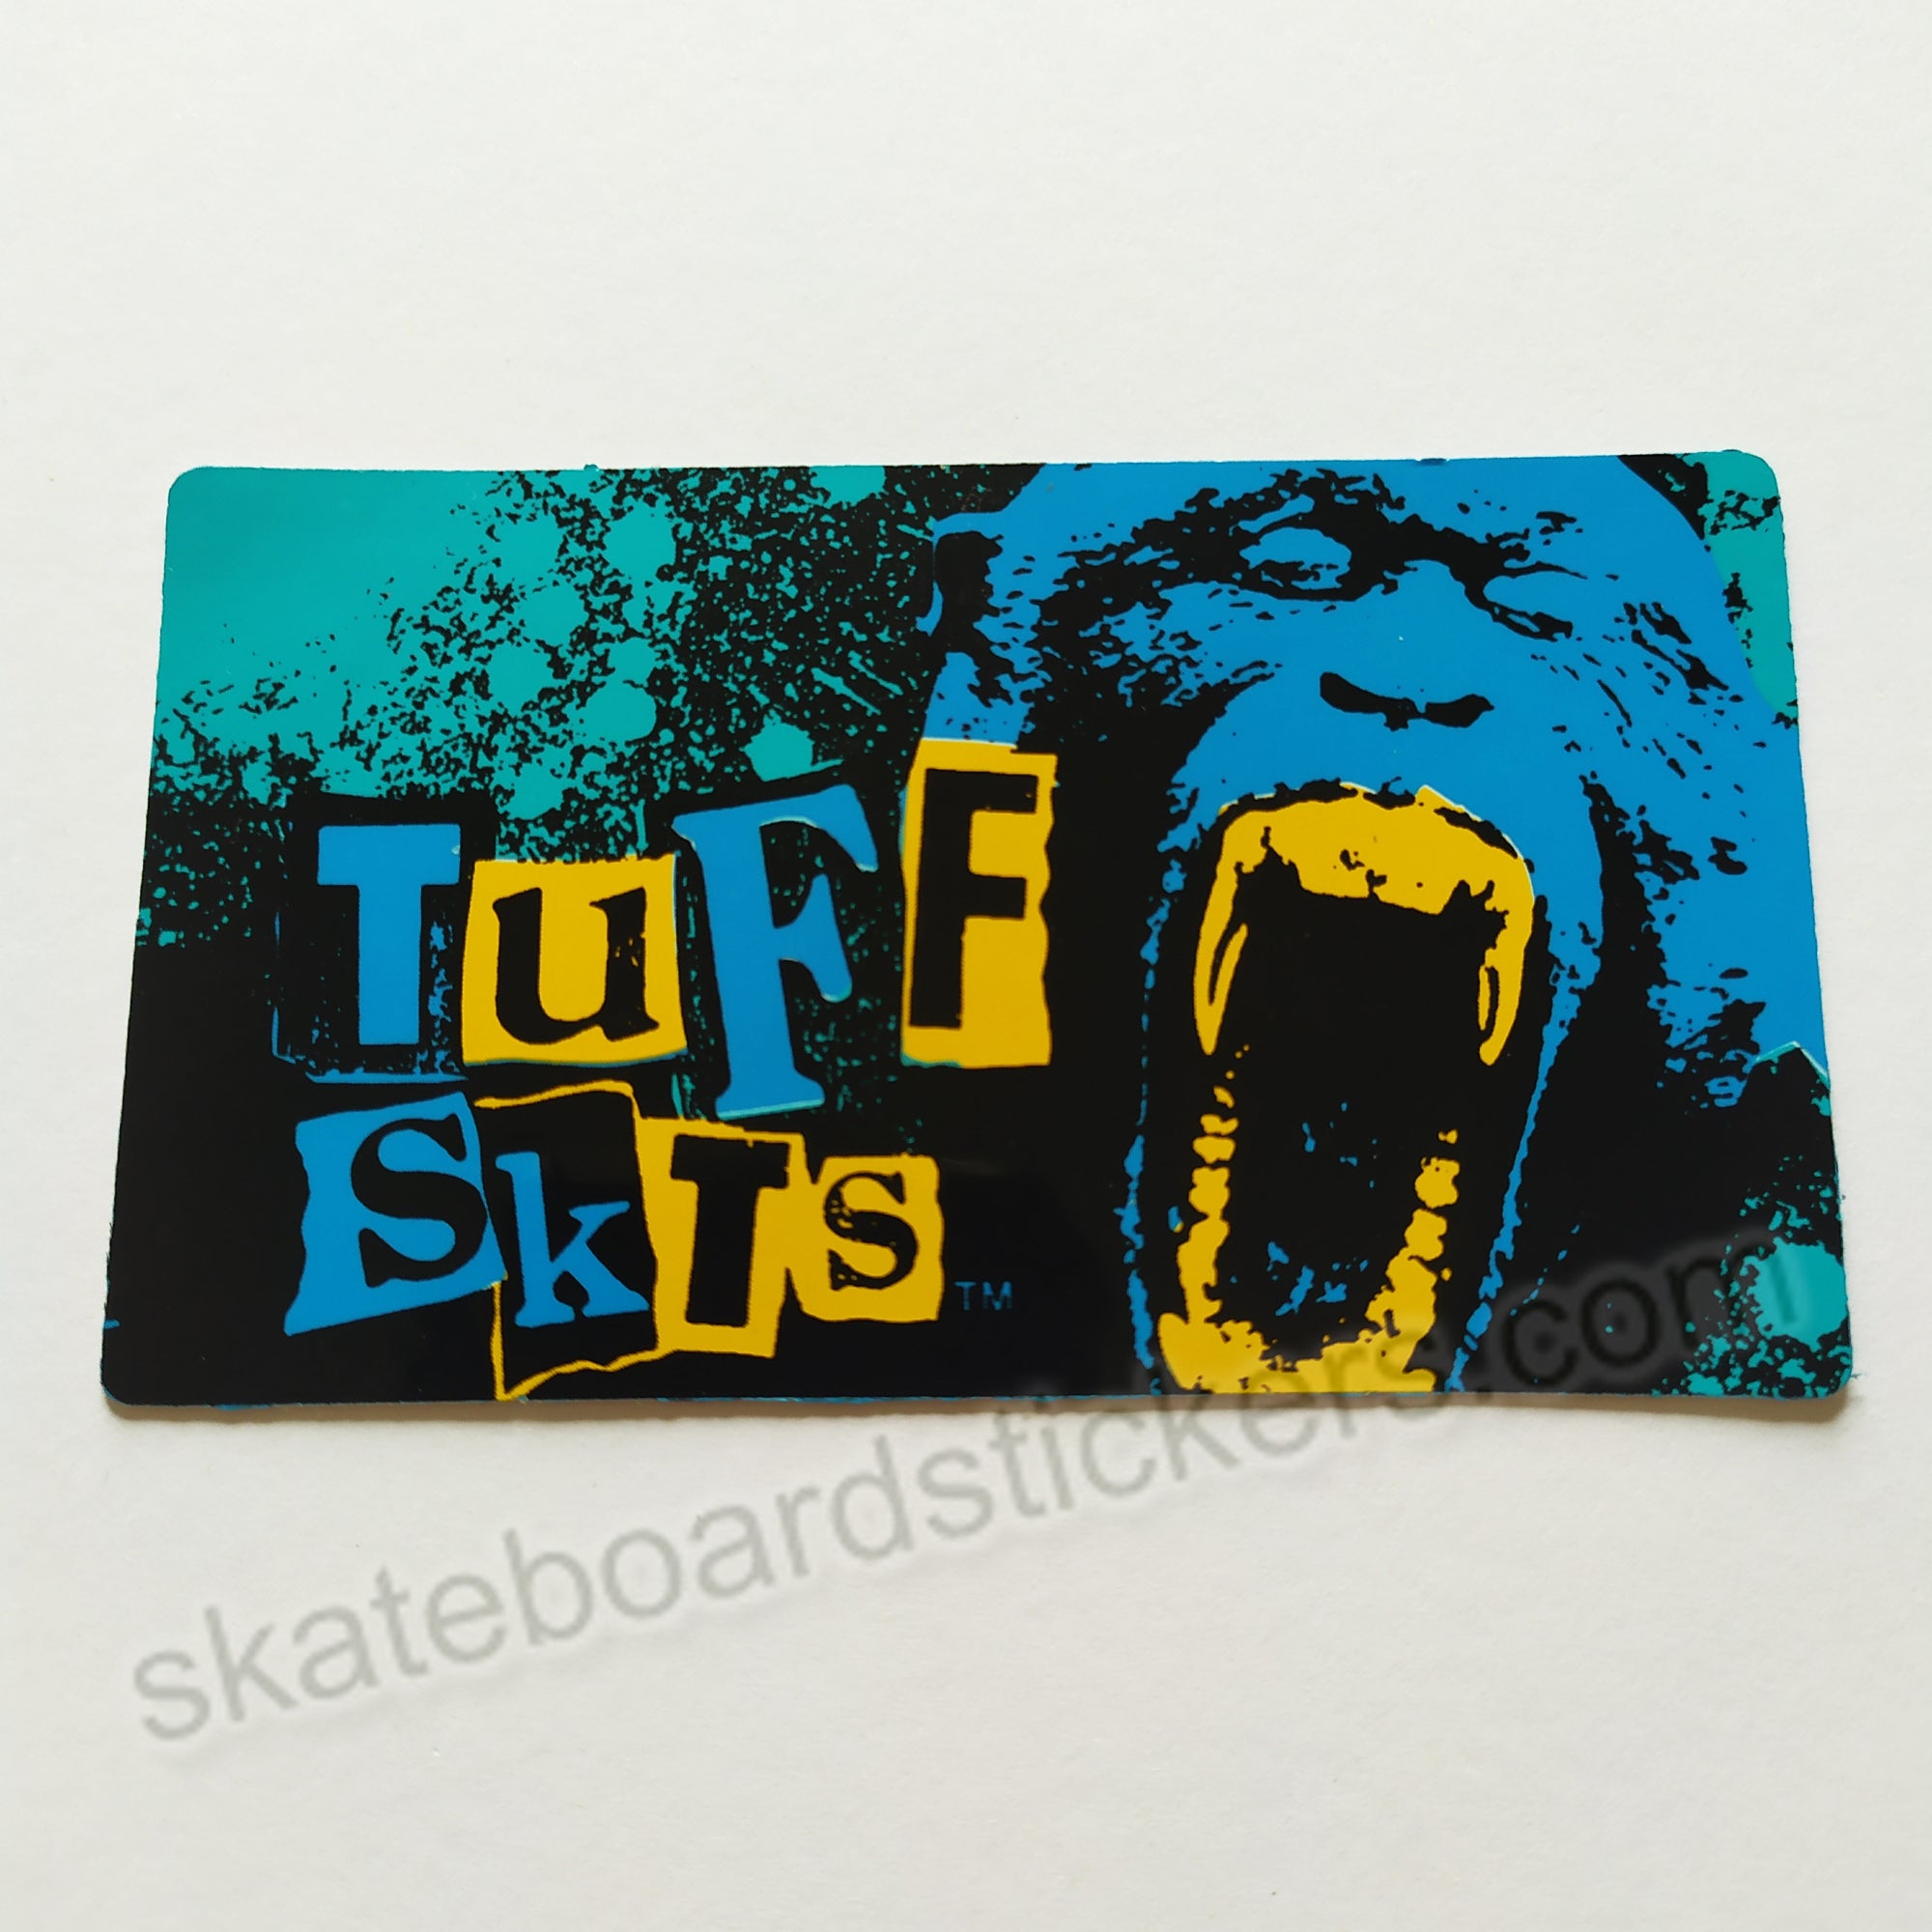 TUFF SKTS Old School Skateboard Sticker - SkateboardStickers.com